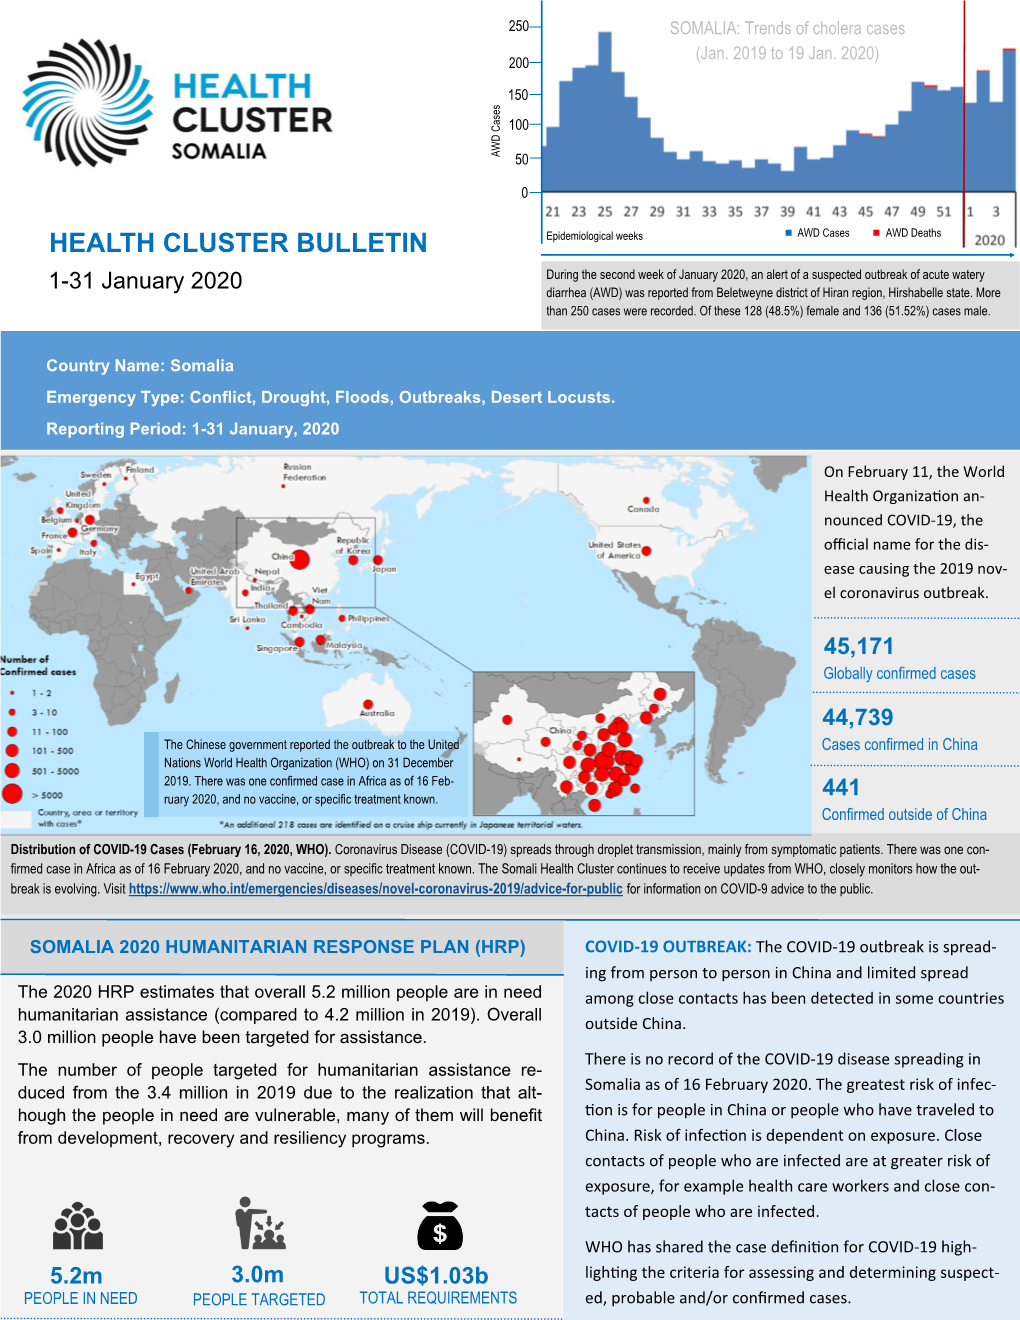 Somalia Health Cluster Bulletin, January 2020.Pub